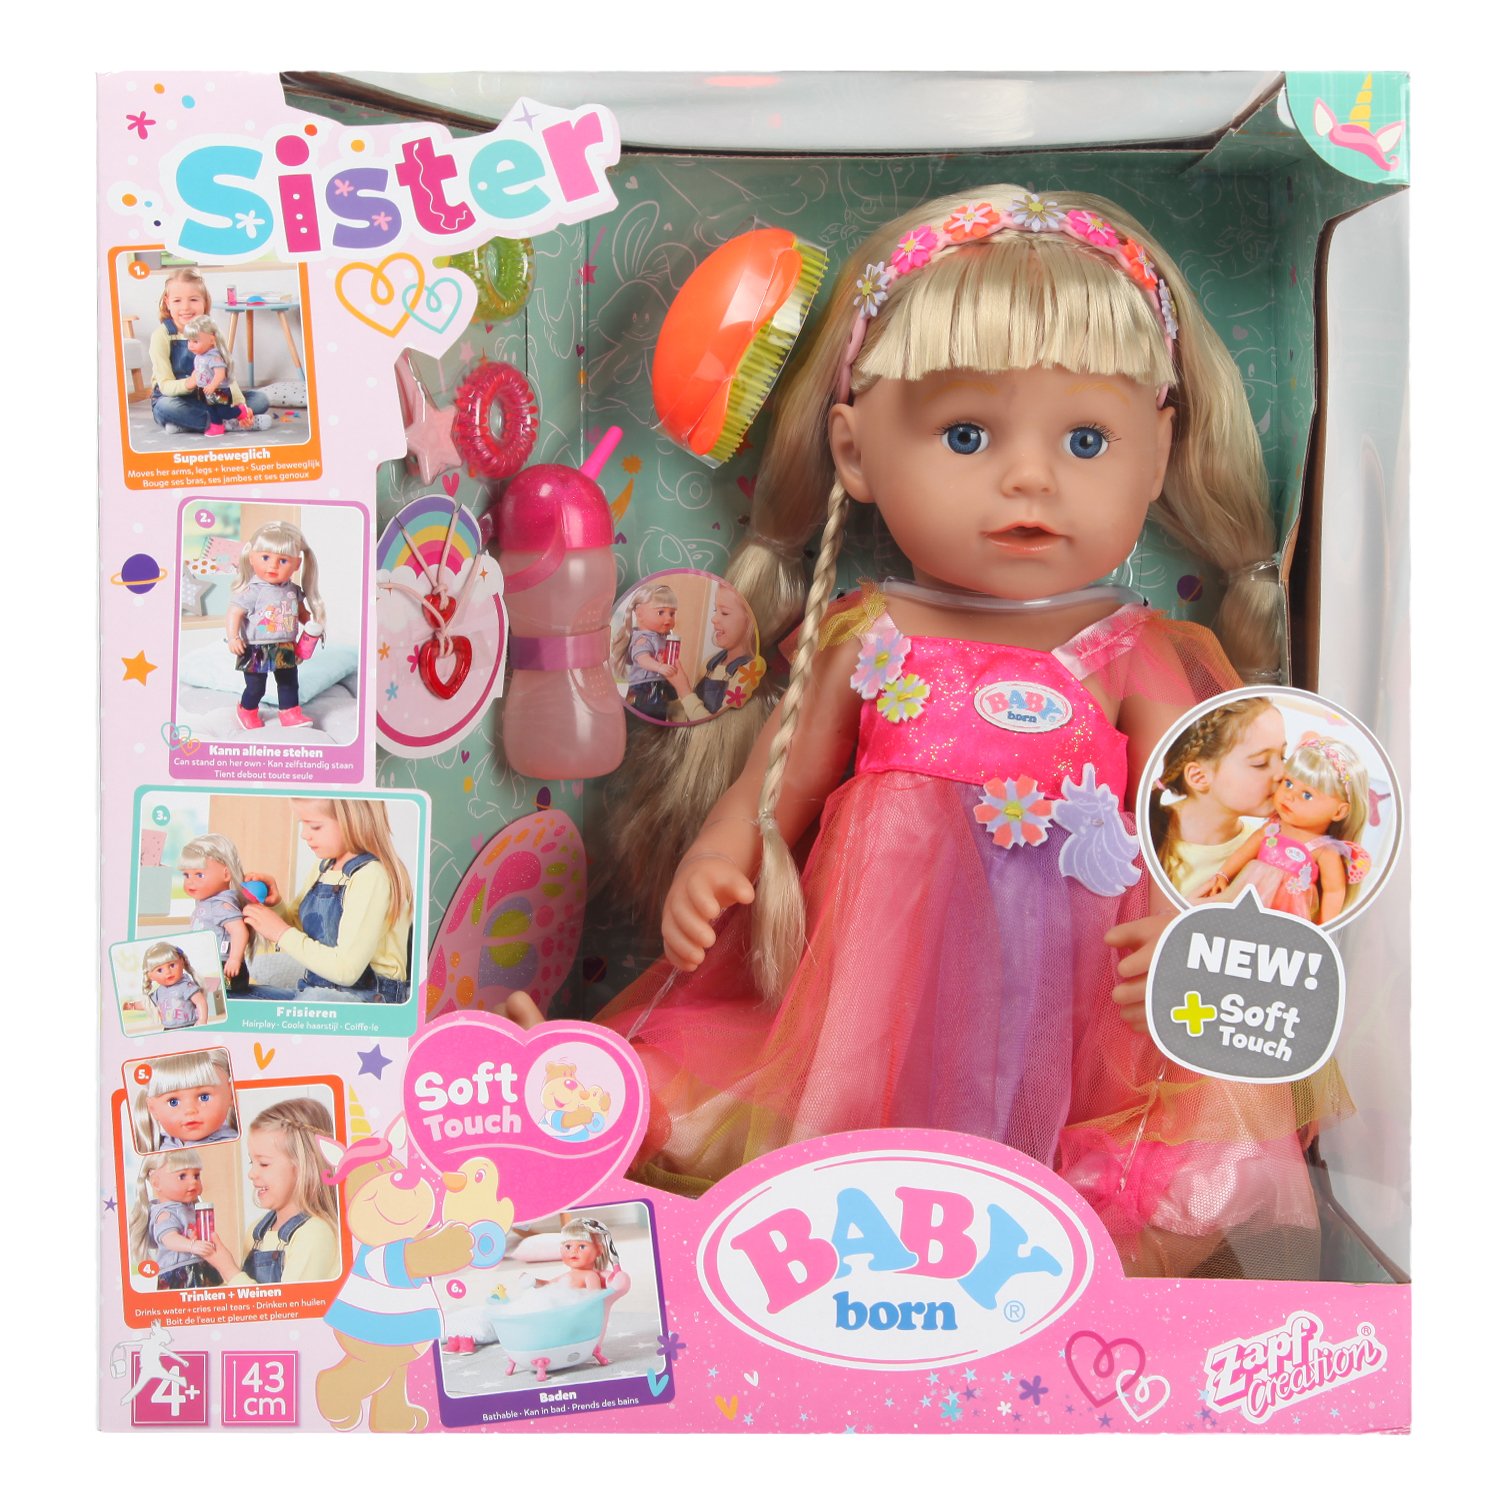 Кукла Сестричка BABY born Soft Touch в платье единорога, 43 см